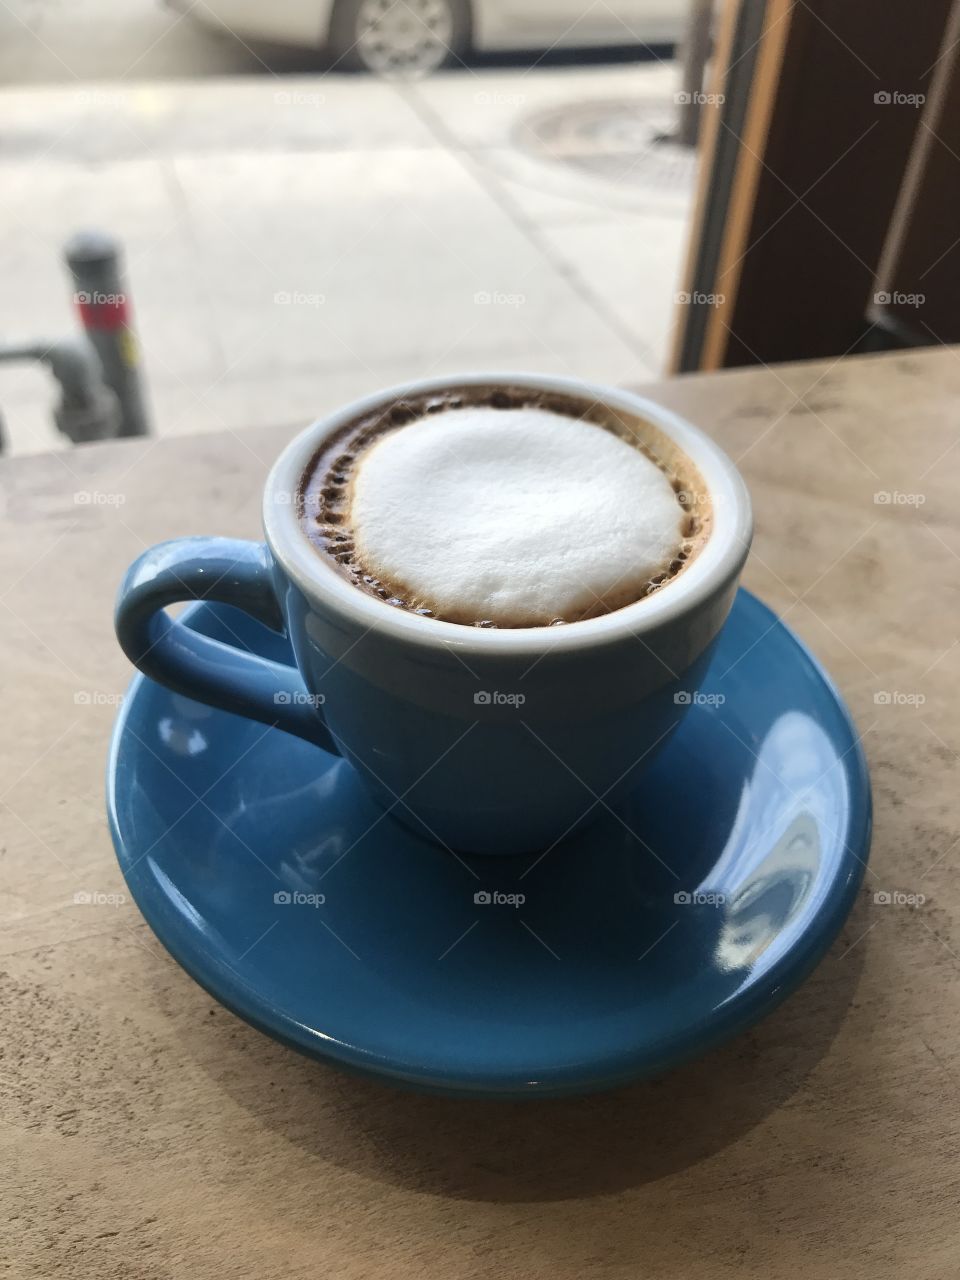 Artisanal cappuccino in blue ceramic mug